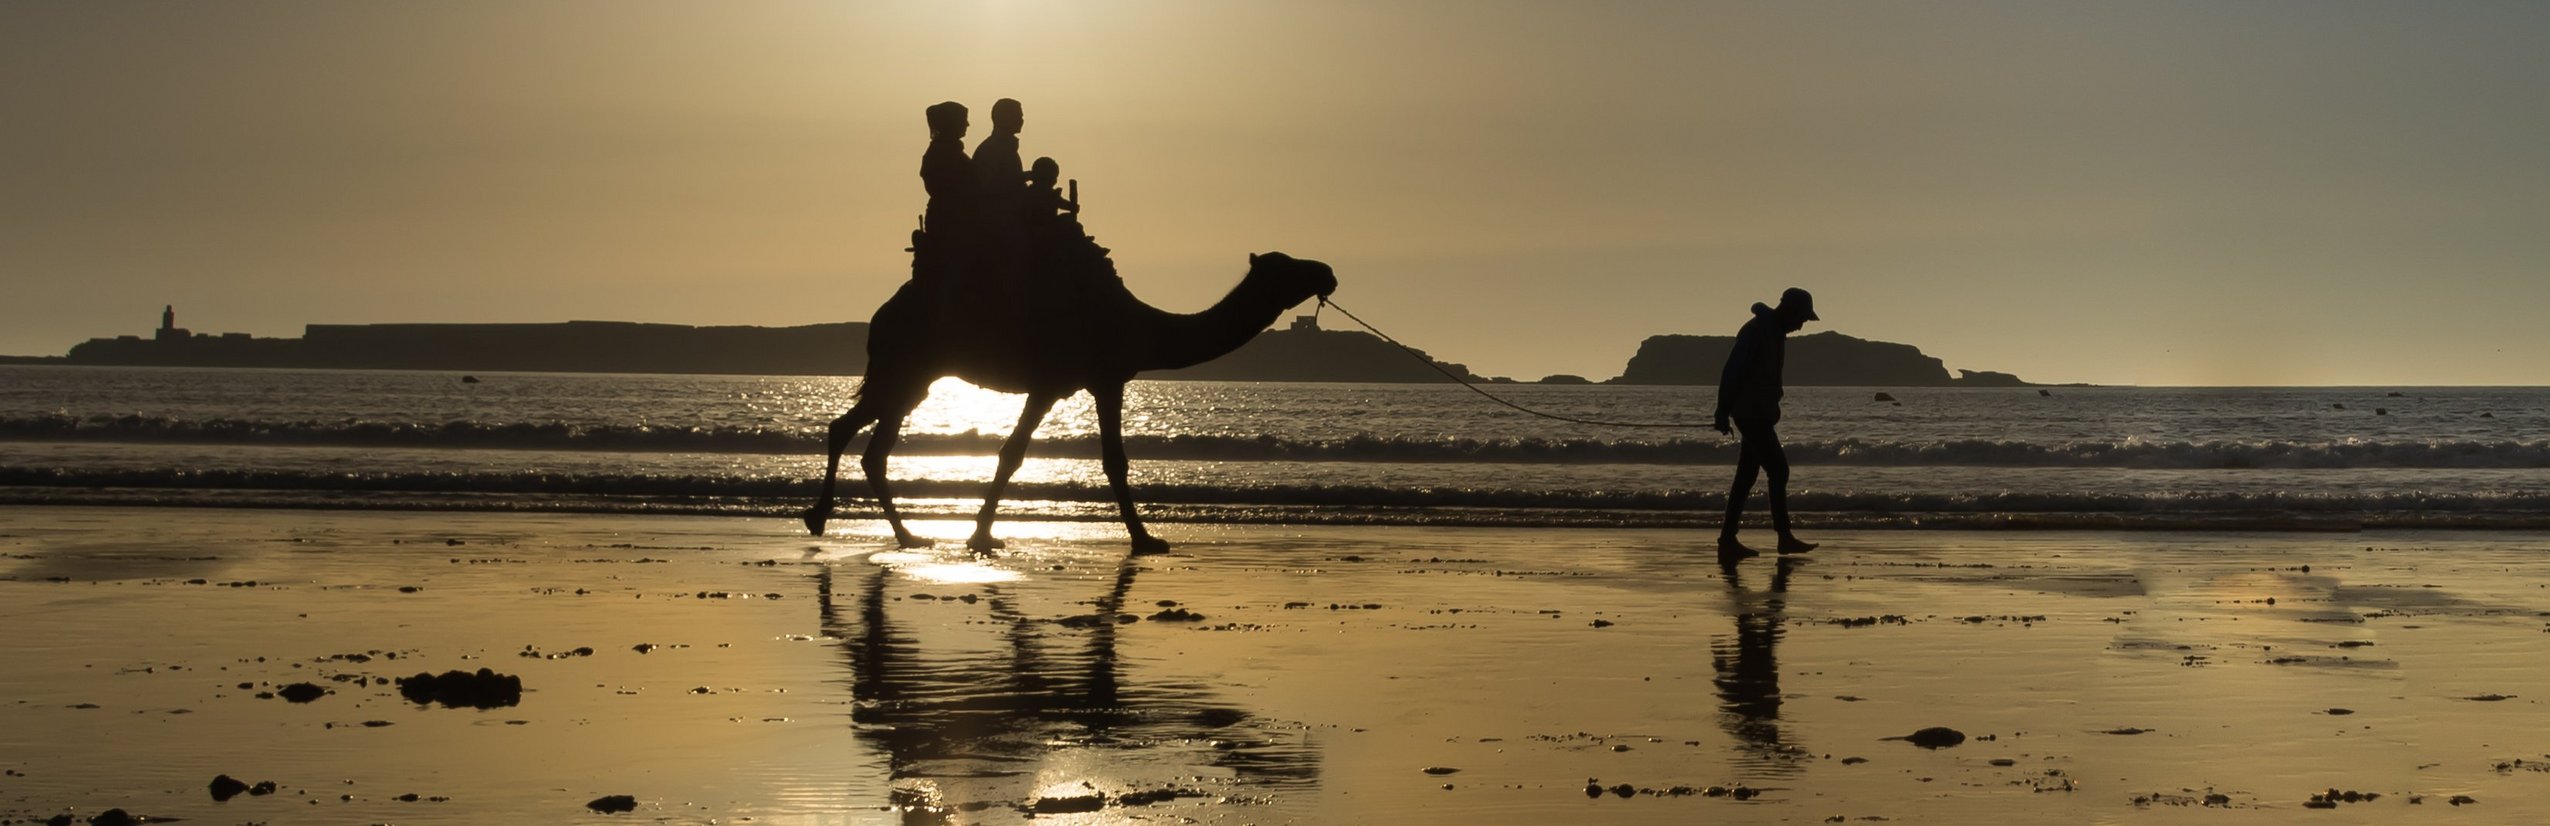 Marokko mit Kindern im Sommer, Marokko for family summer